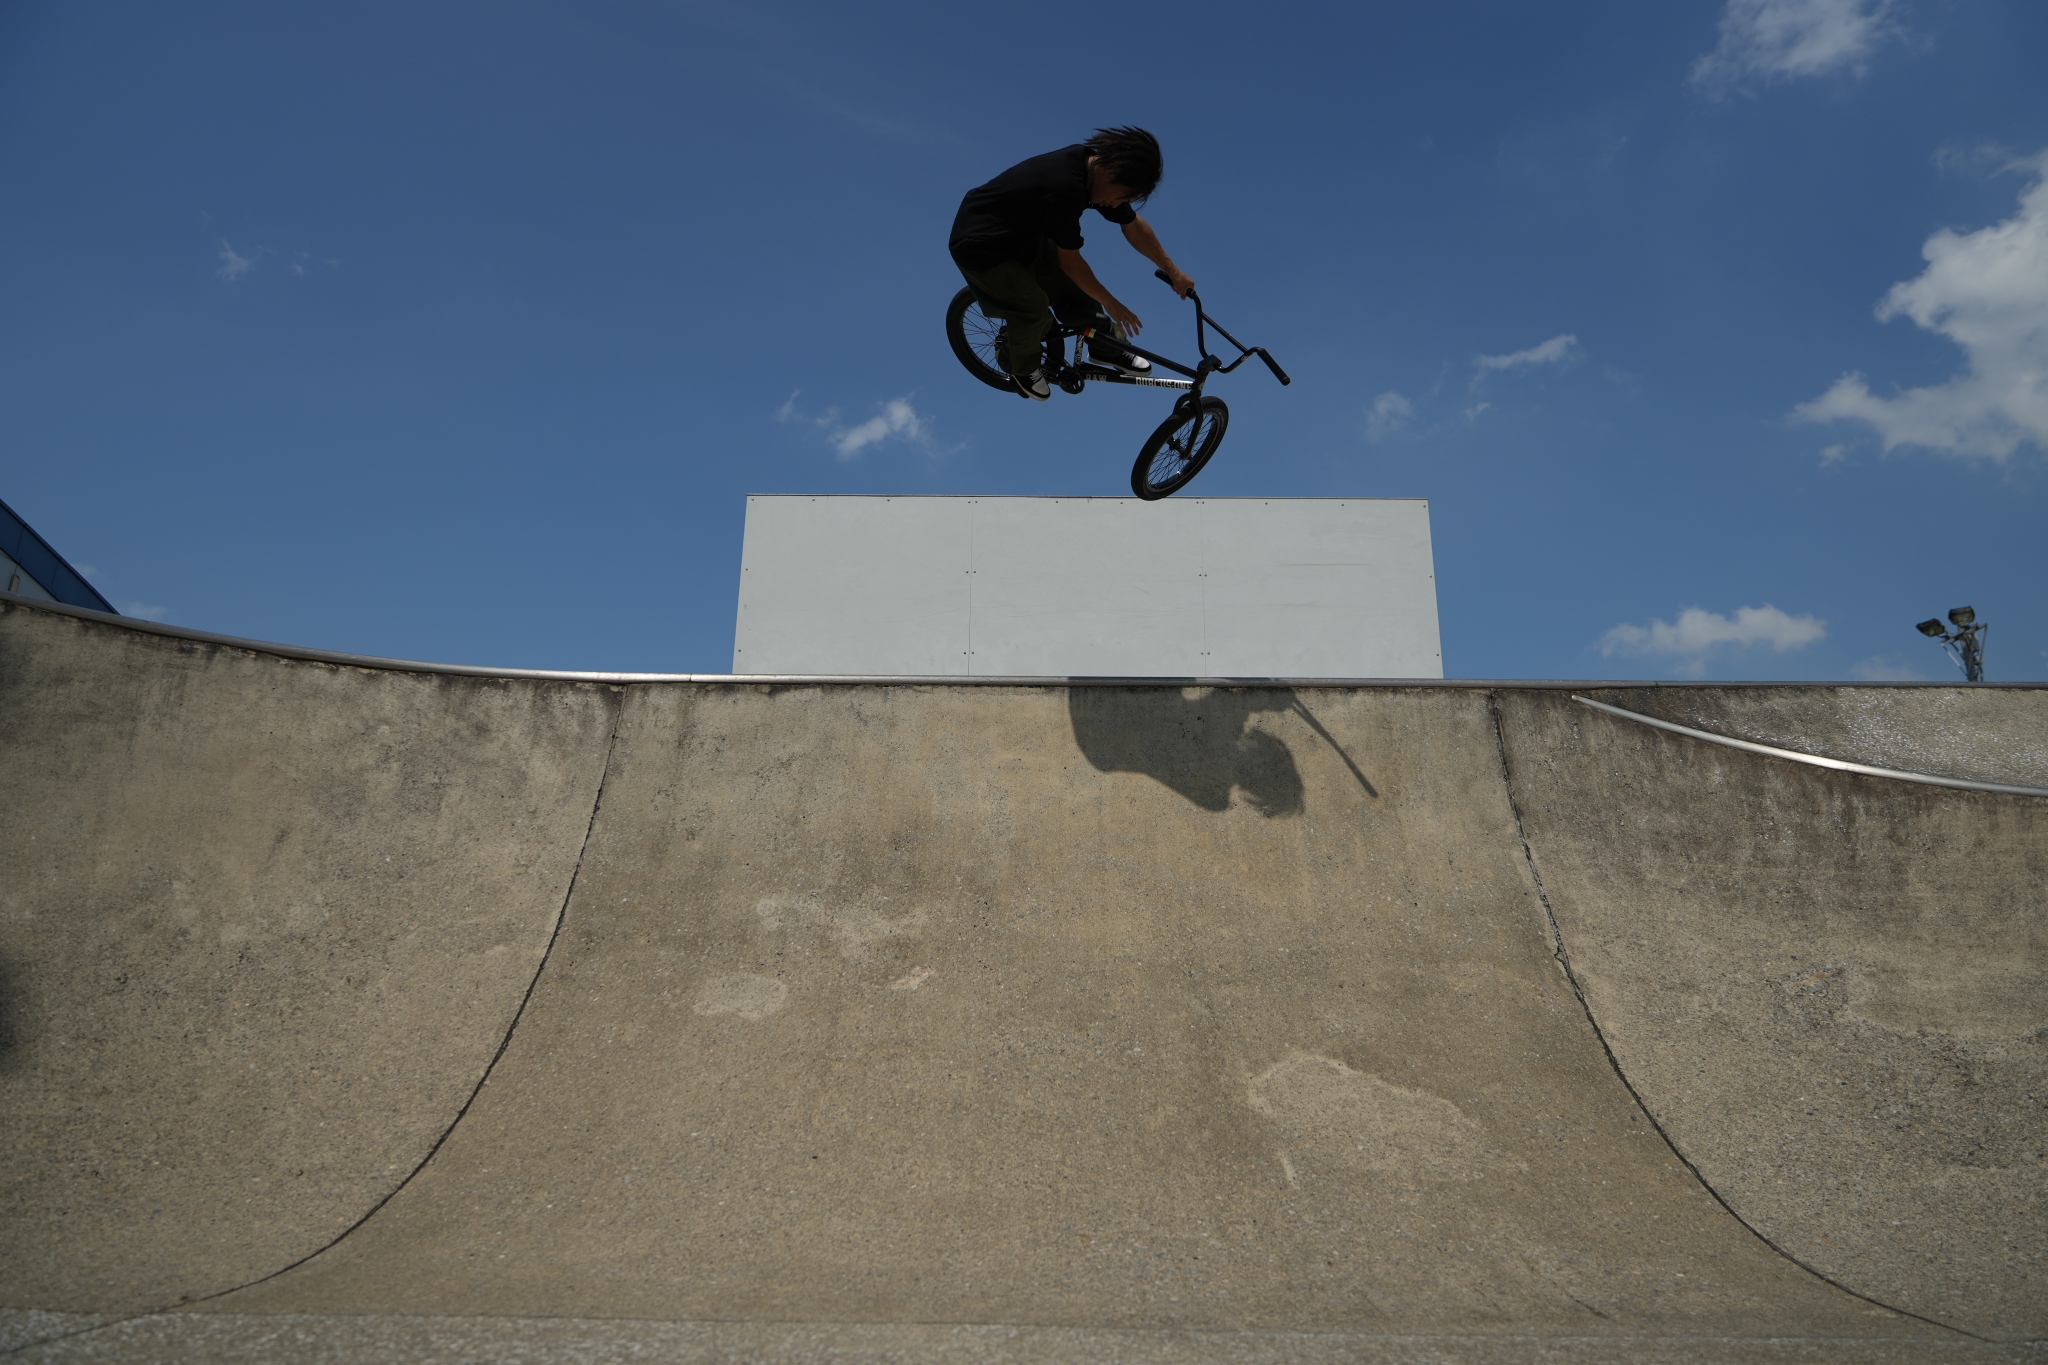 BMX rider mid-jump in a skate park